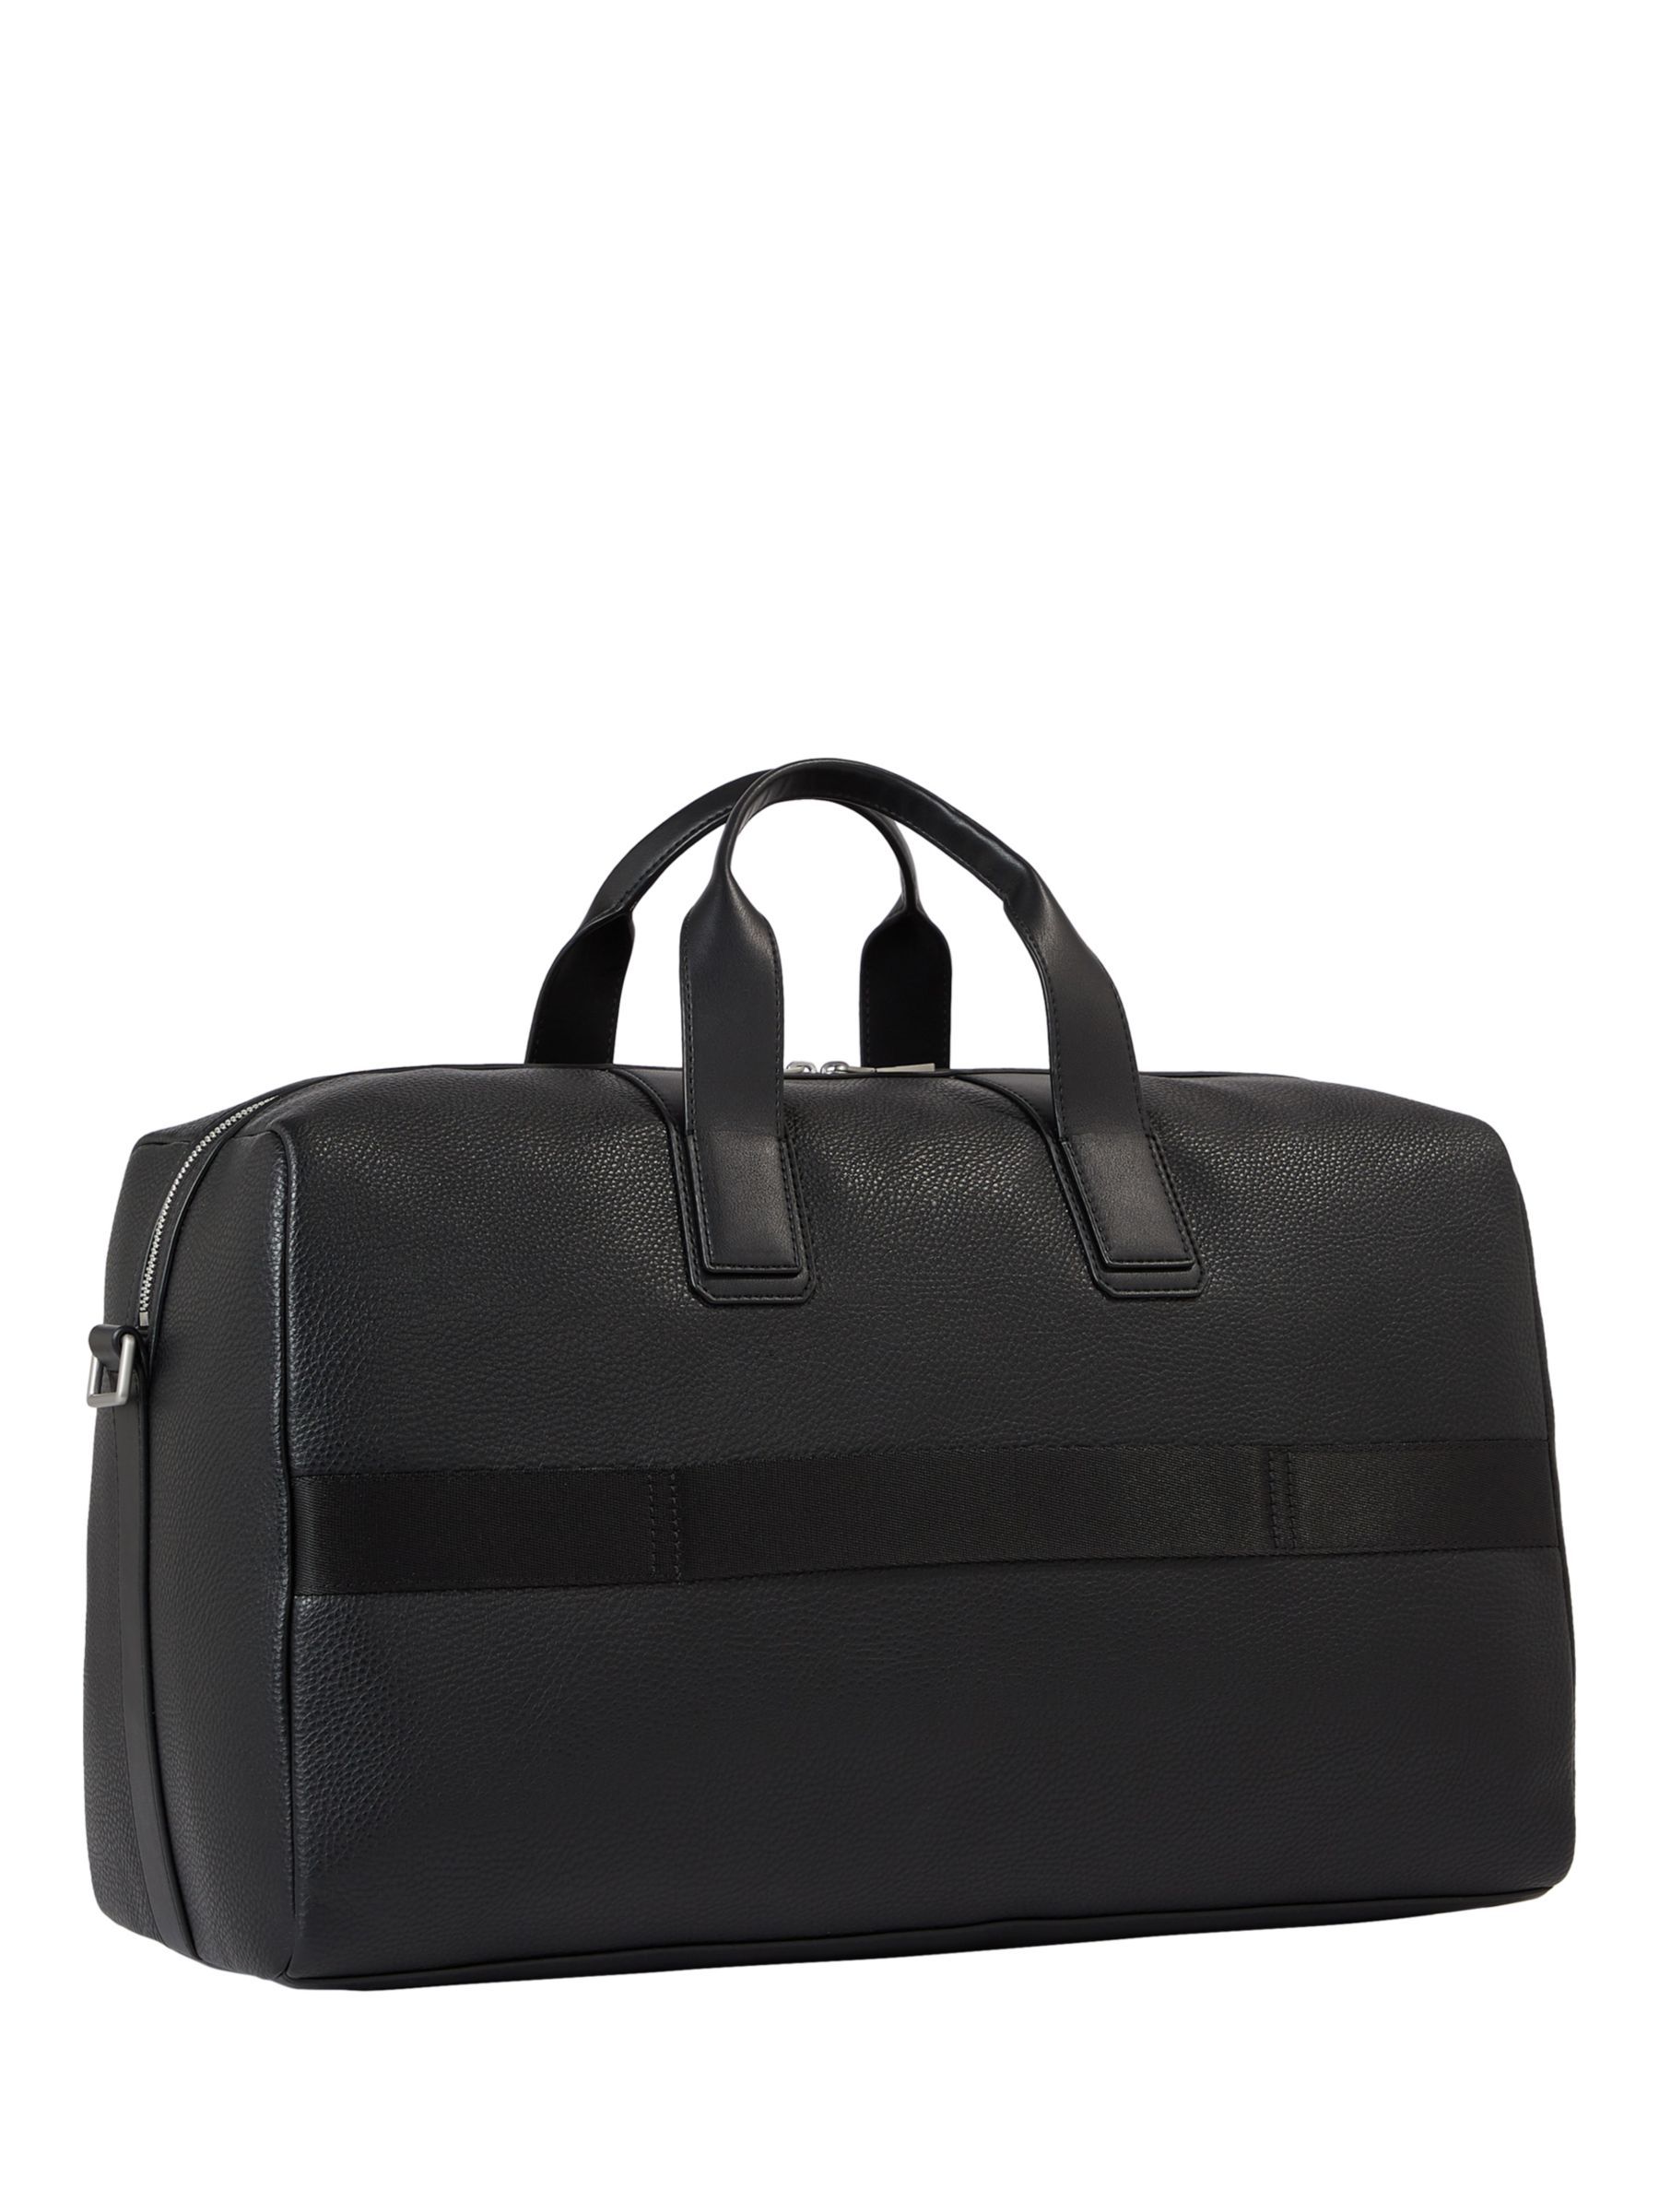 Tommy Hilfiger Duffle Bag, Black, One Size